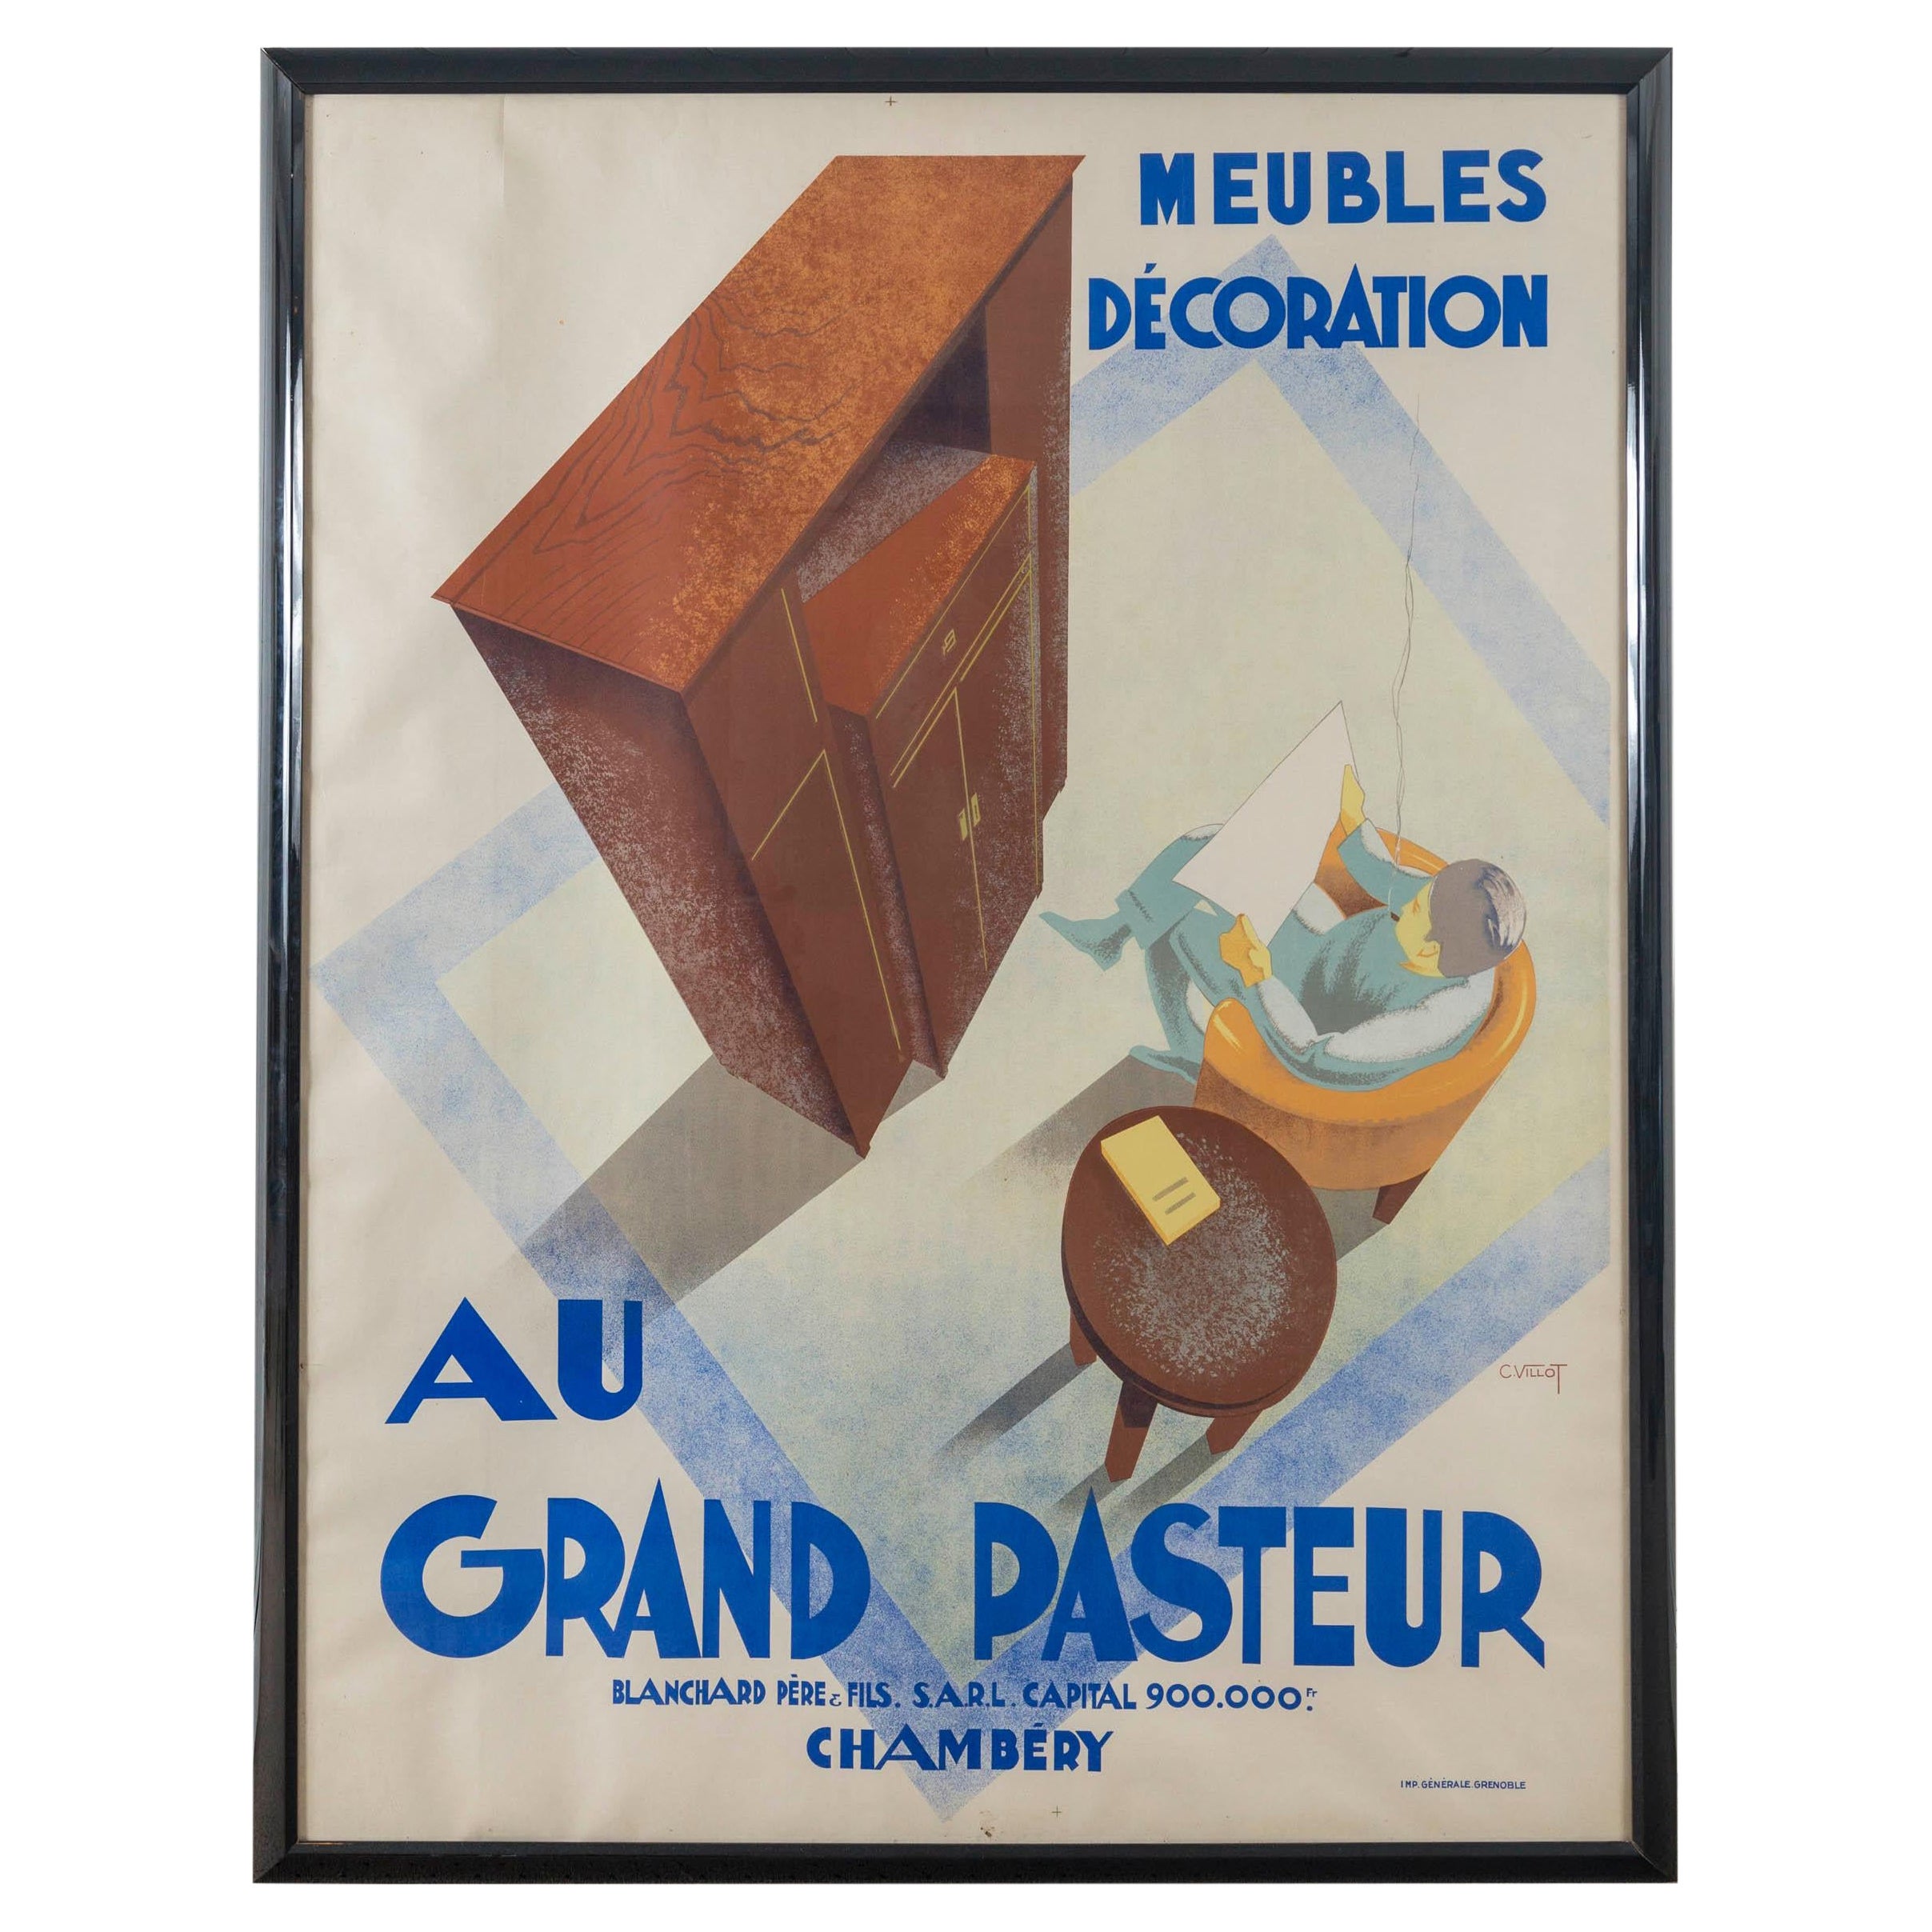 Framed French Poster, 'Au Grand Pasteur' by C. Villot, France, 1935